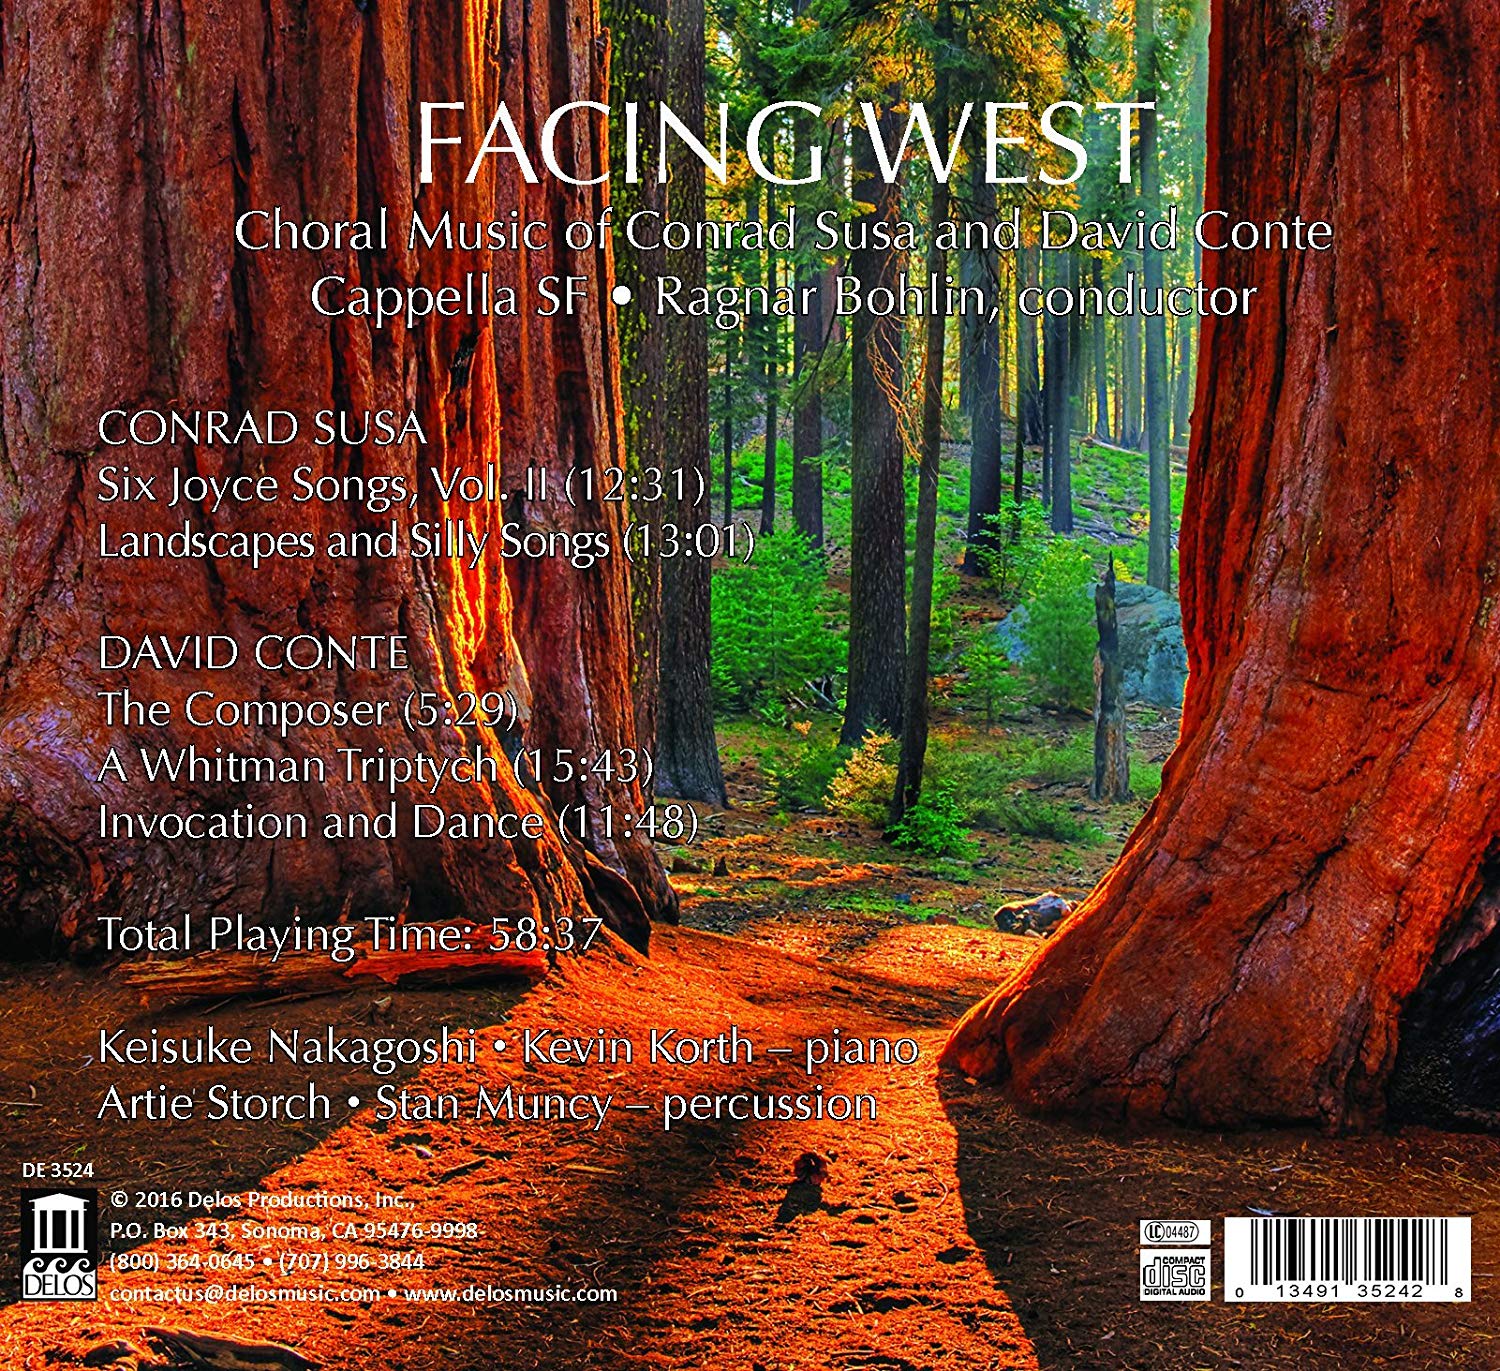 Facing West - Choral Music of Conrad Susa and David Conte - slide-1